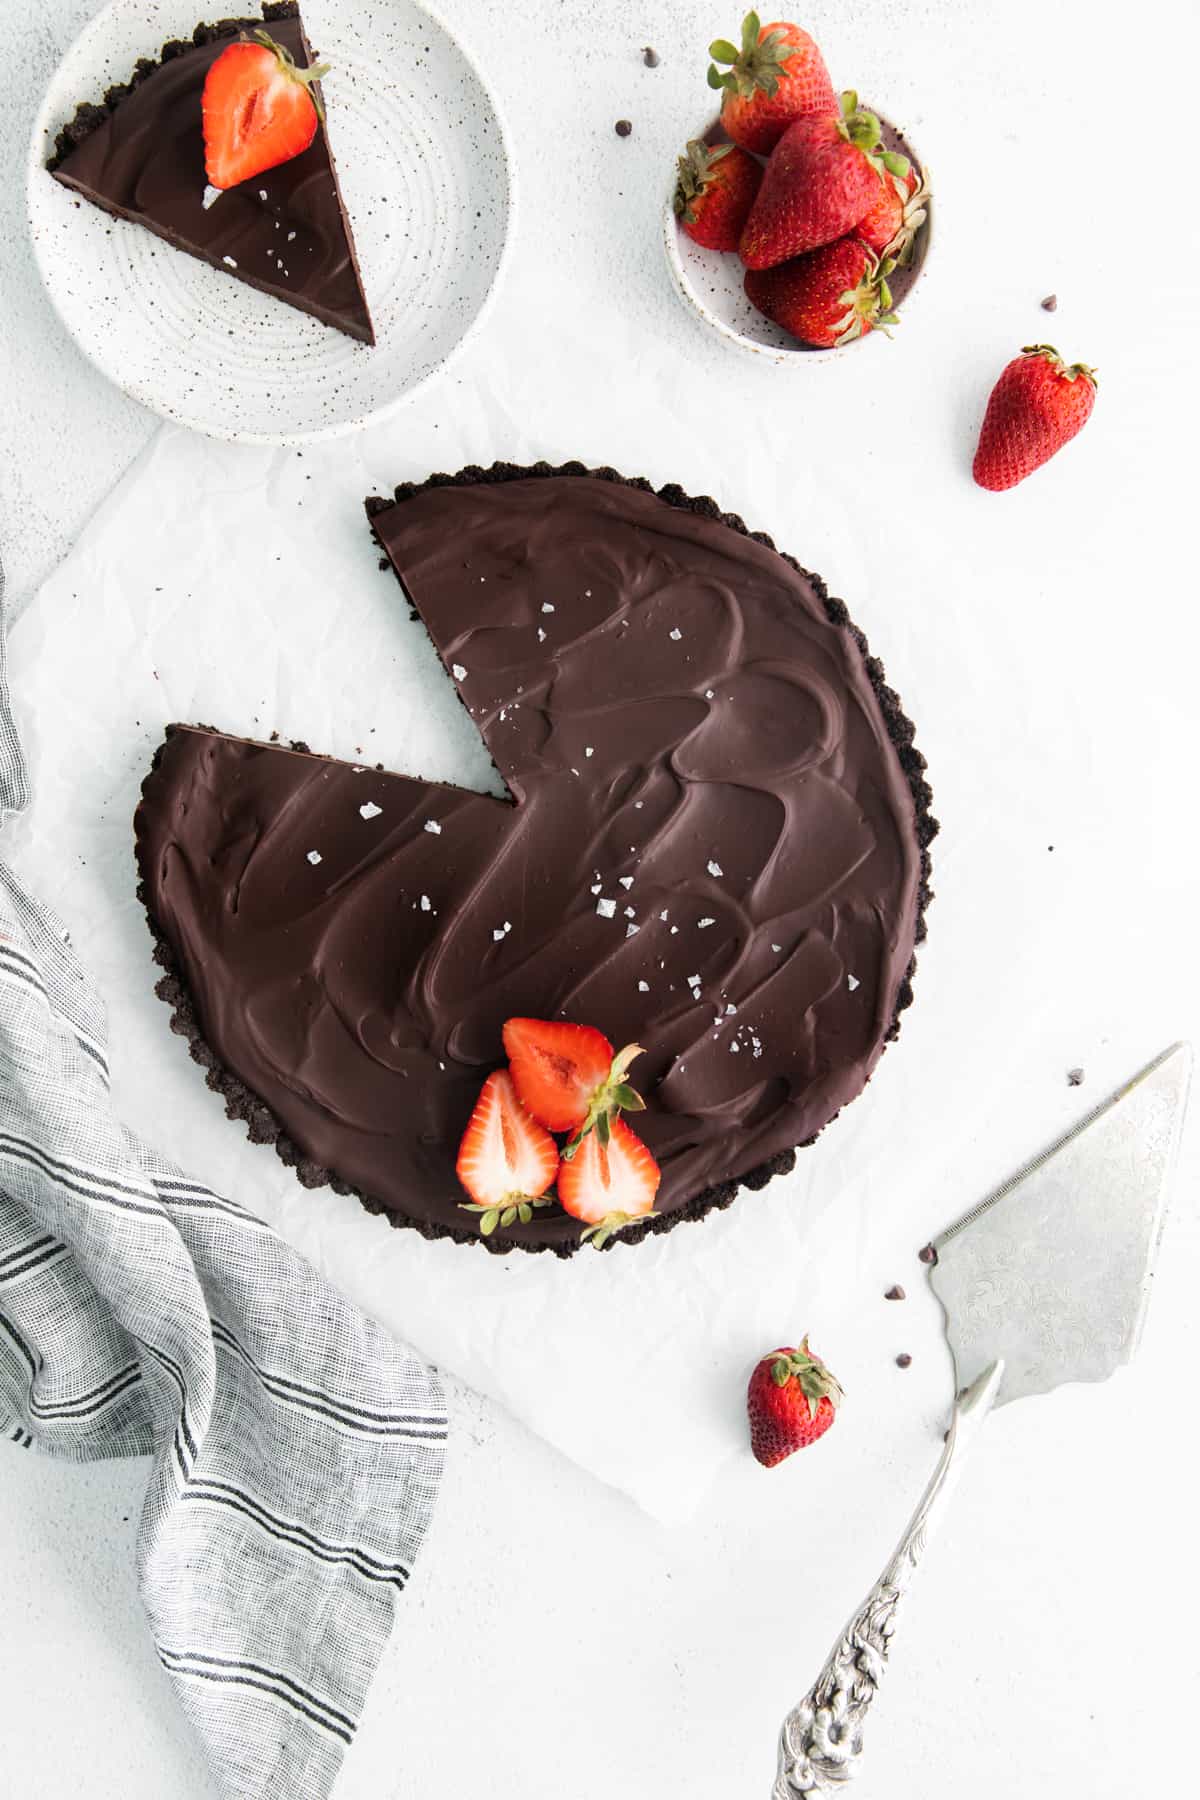 featured chocolate tart.